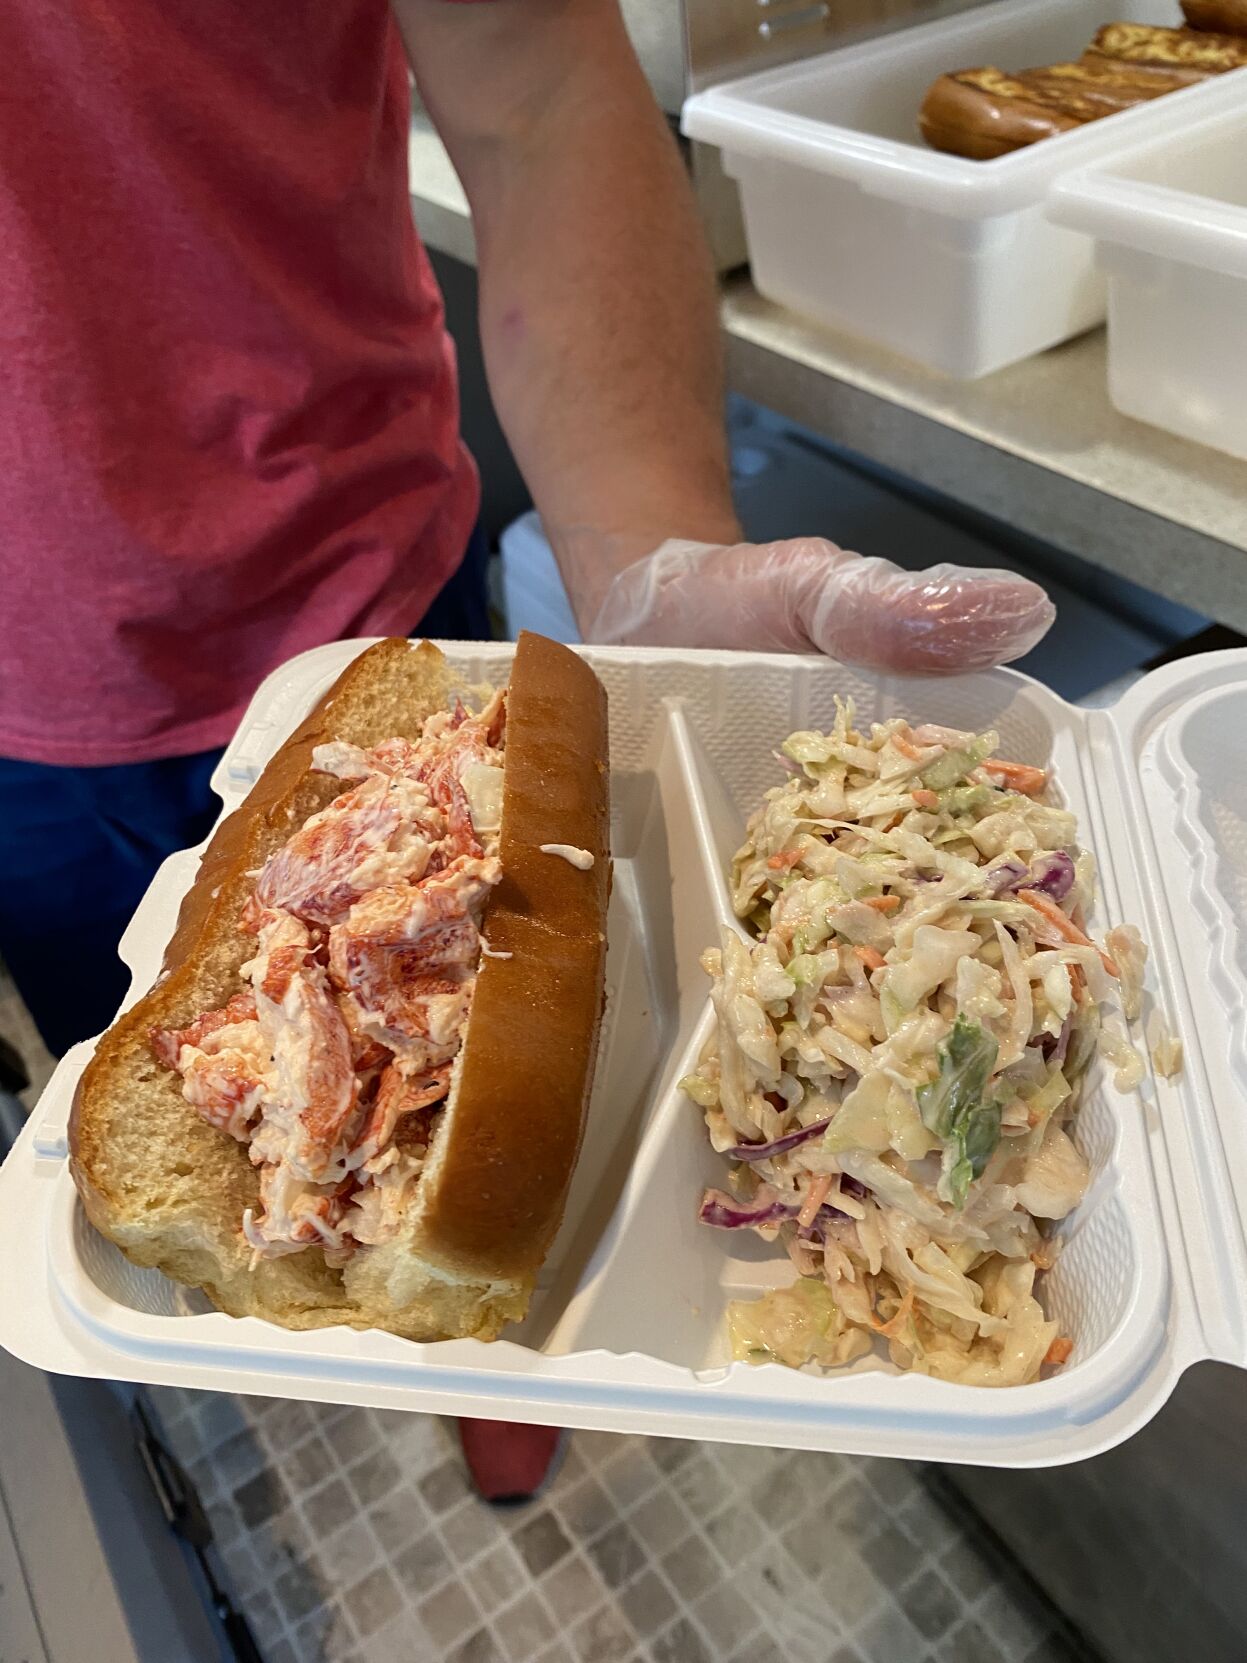 35 food trucks unite in North Charleston for annual festival Food